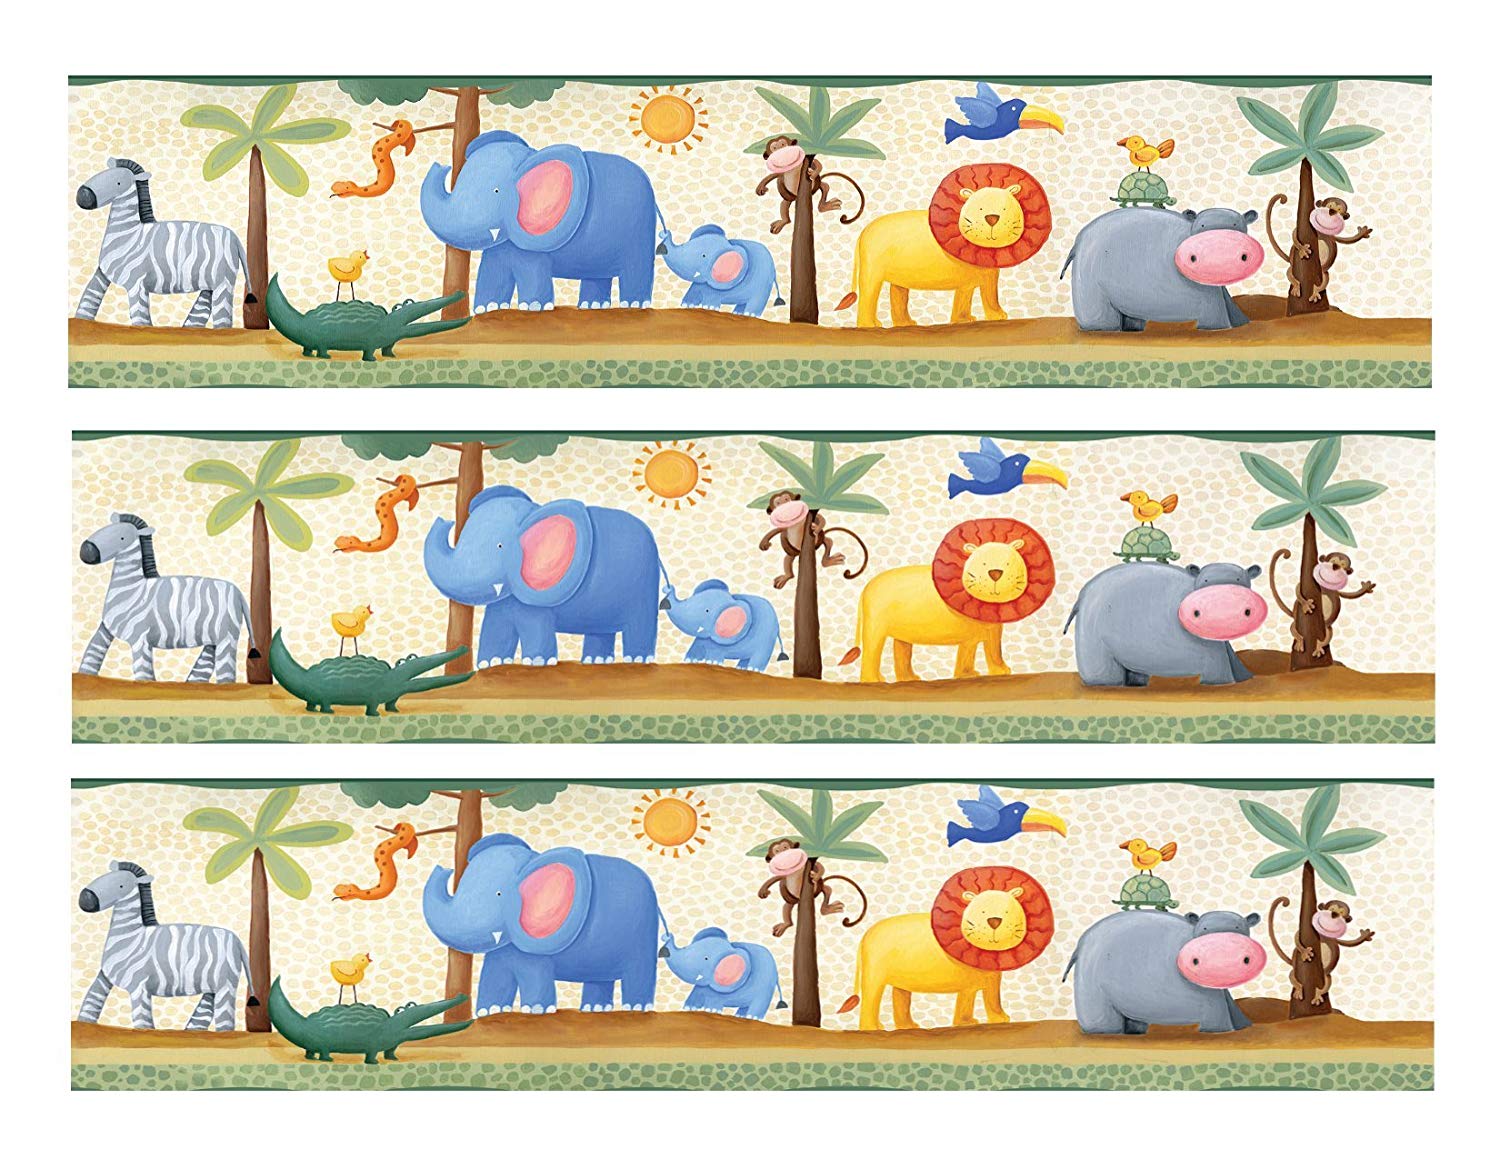 Jungle Animals cake Edible Icing Image border strips (3 Strips).